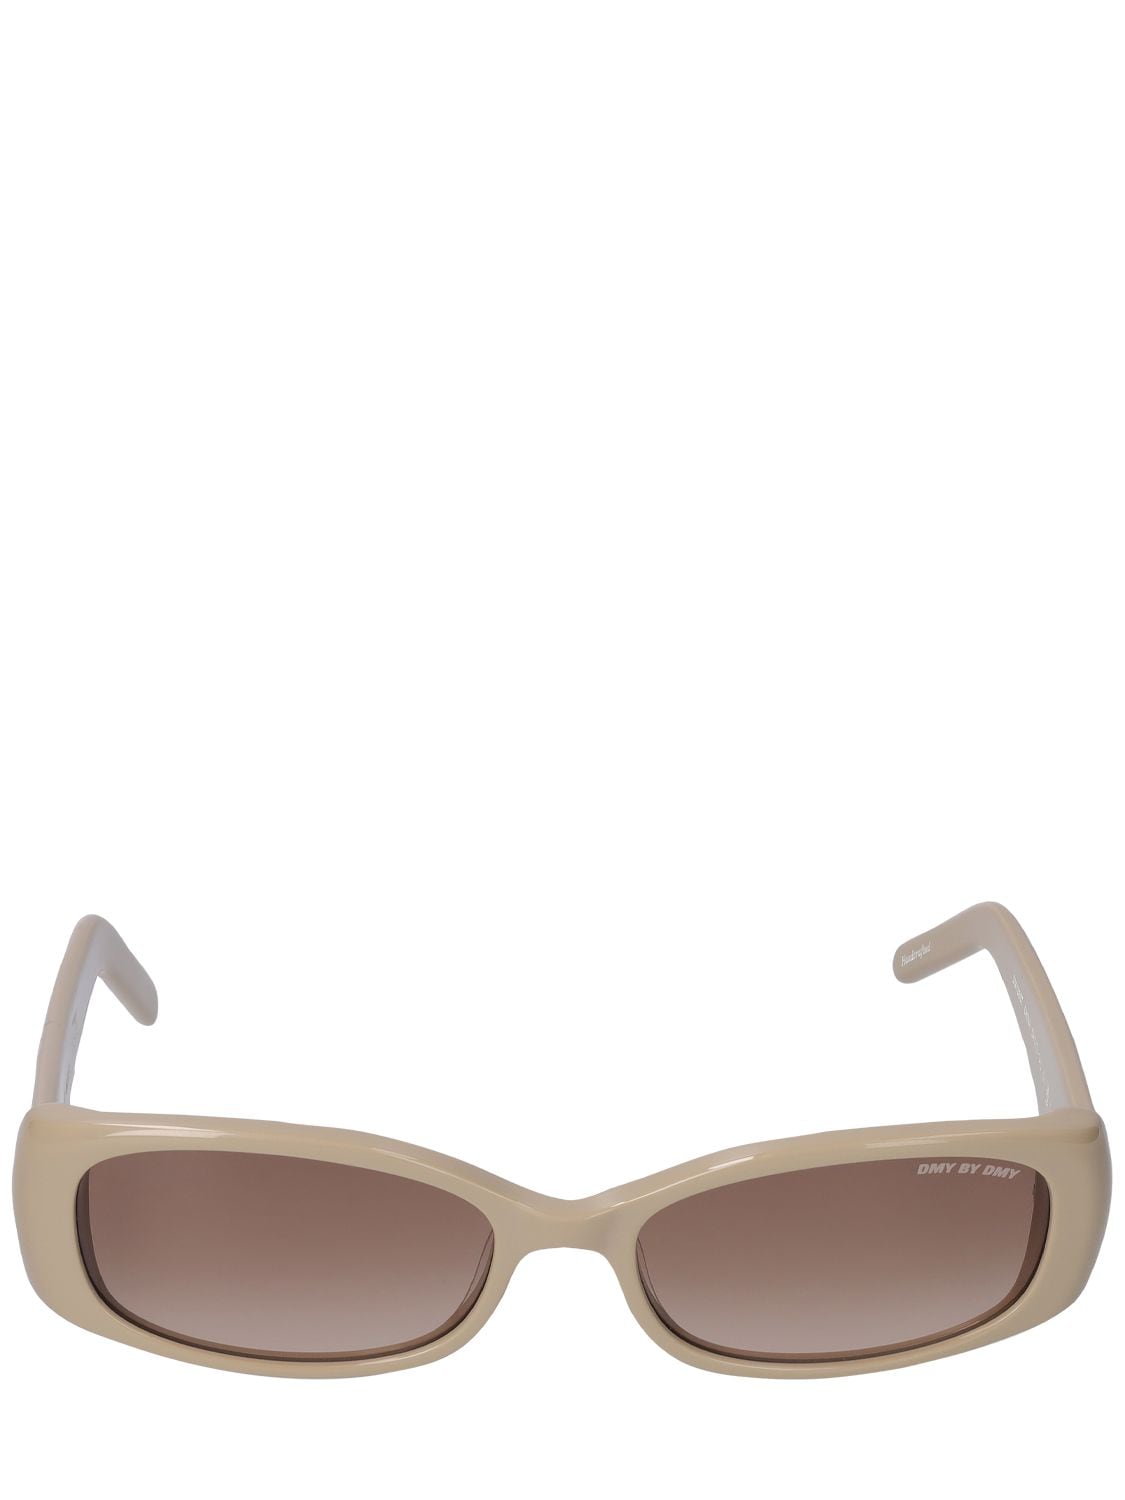 Ovale Sonnenbrille Aus Acetat „billy“ - DMY BY DMY - Modalova